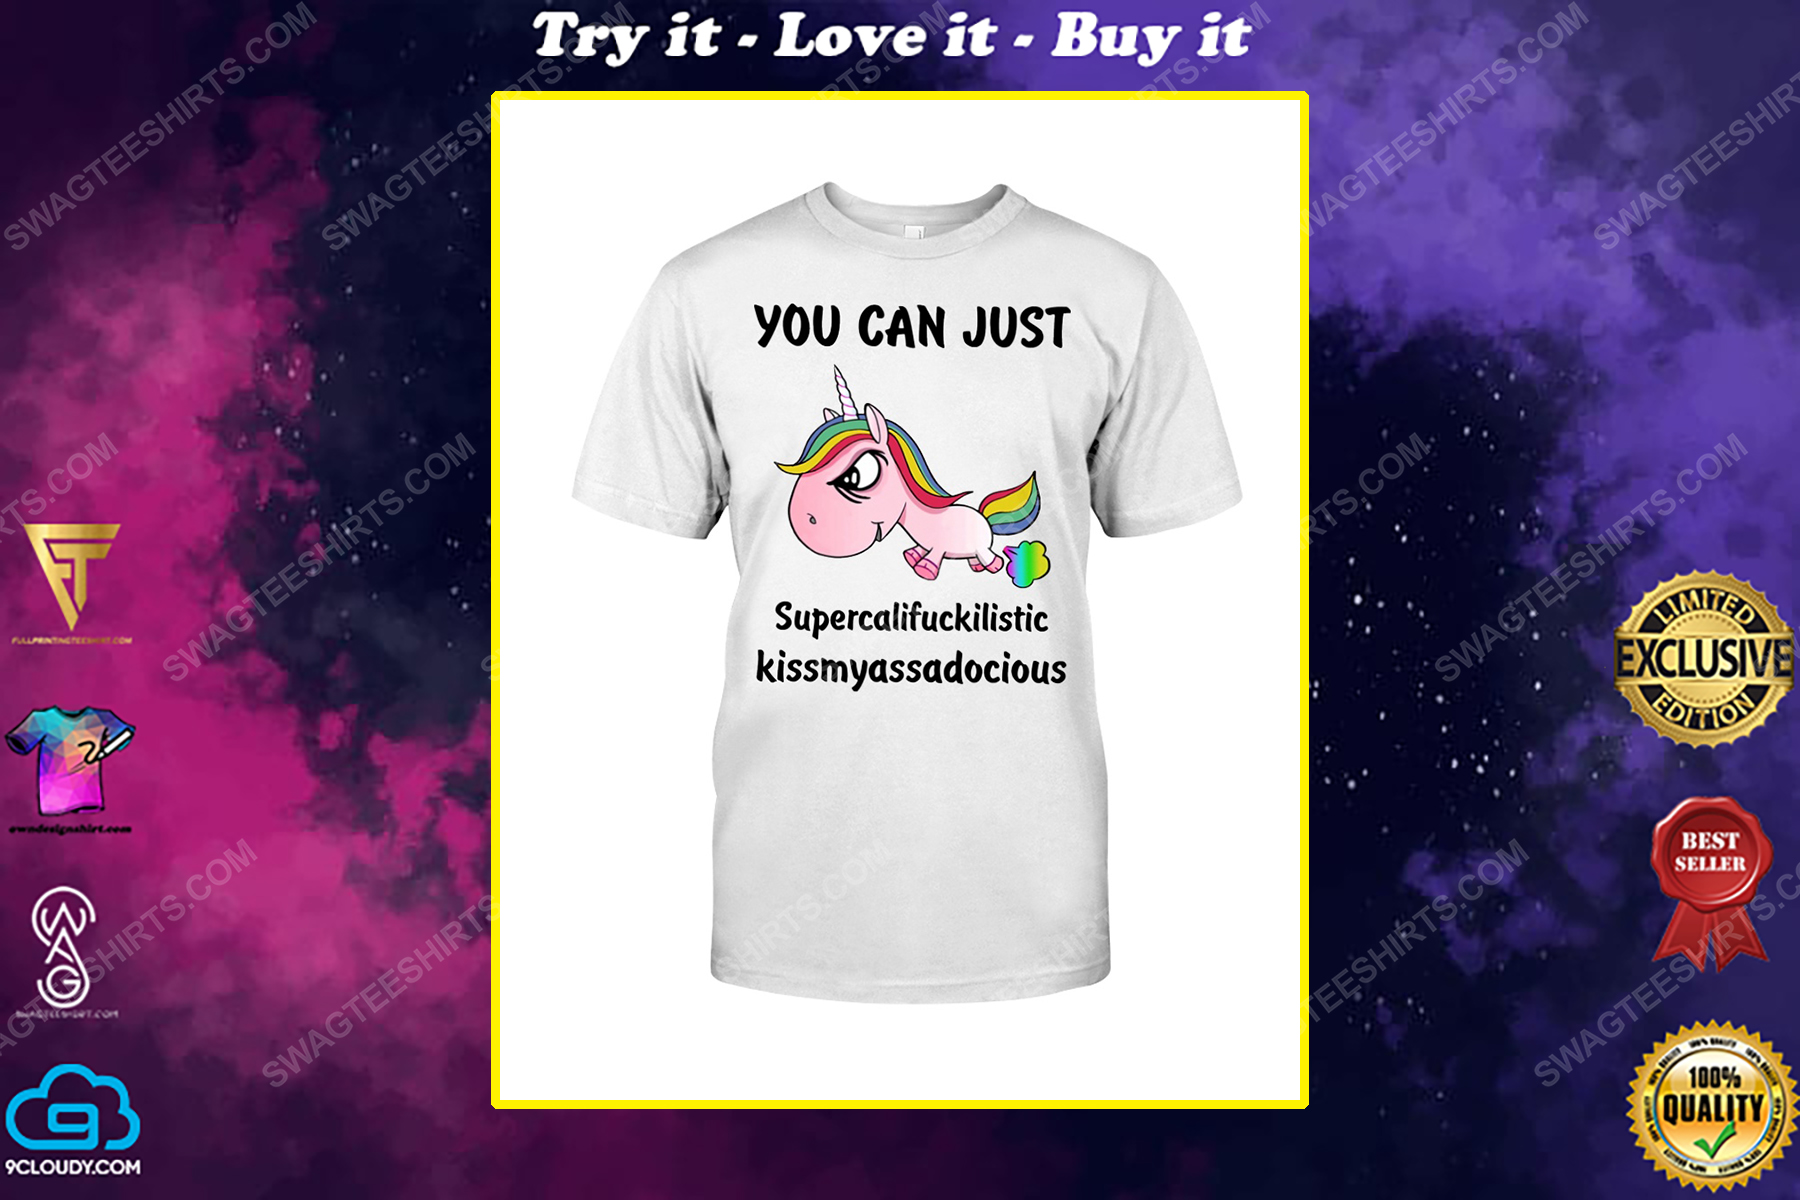 Unicorn you can just supercalifuckilistic kissmyassadocious shirt